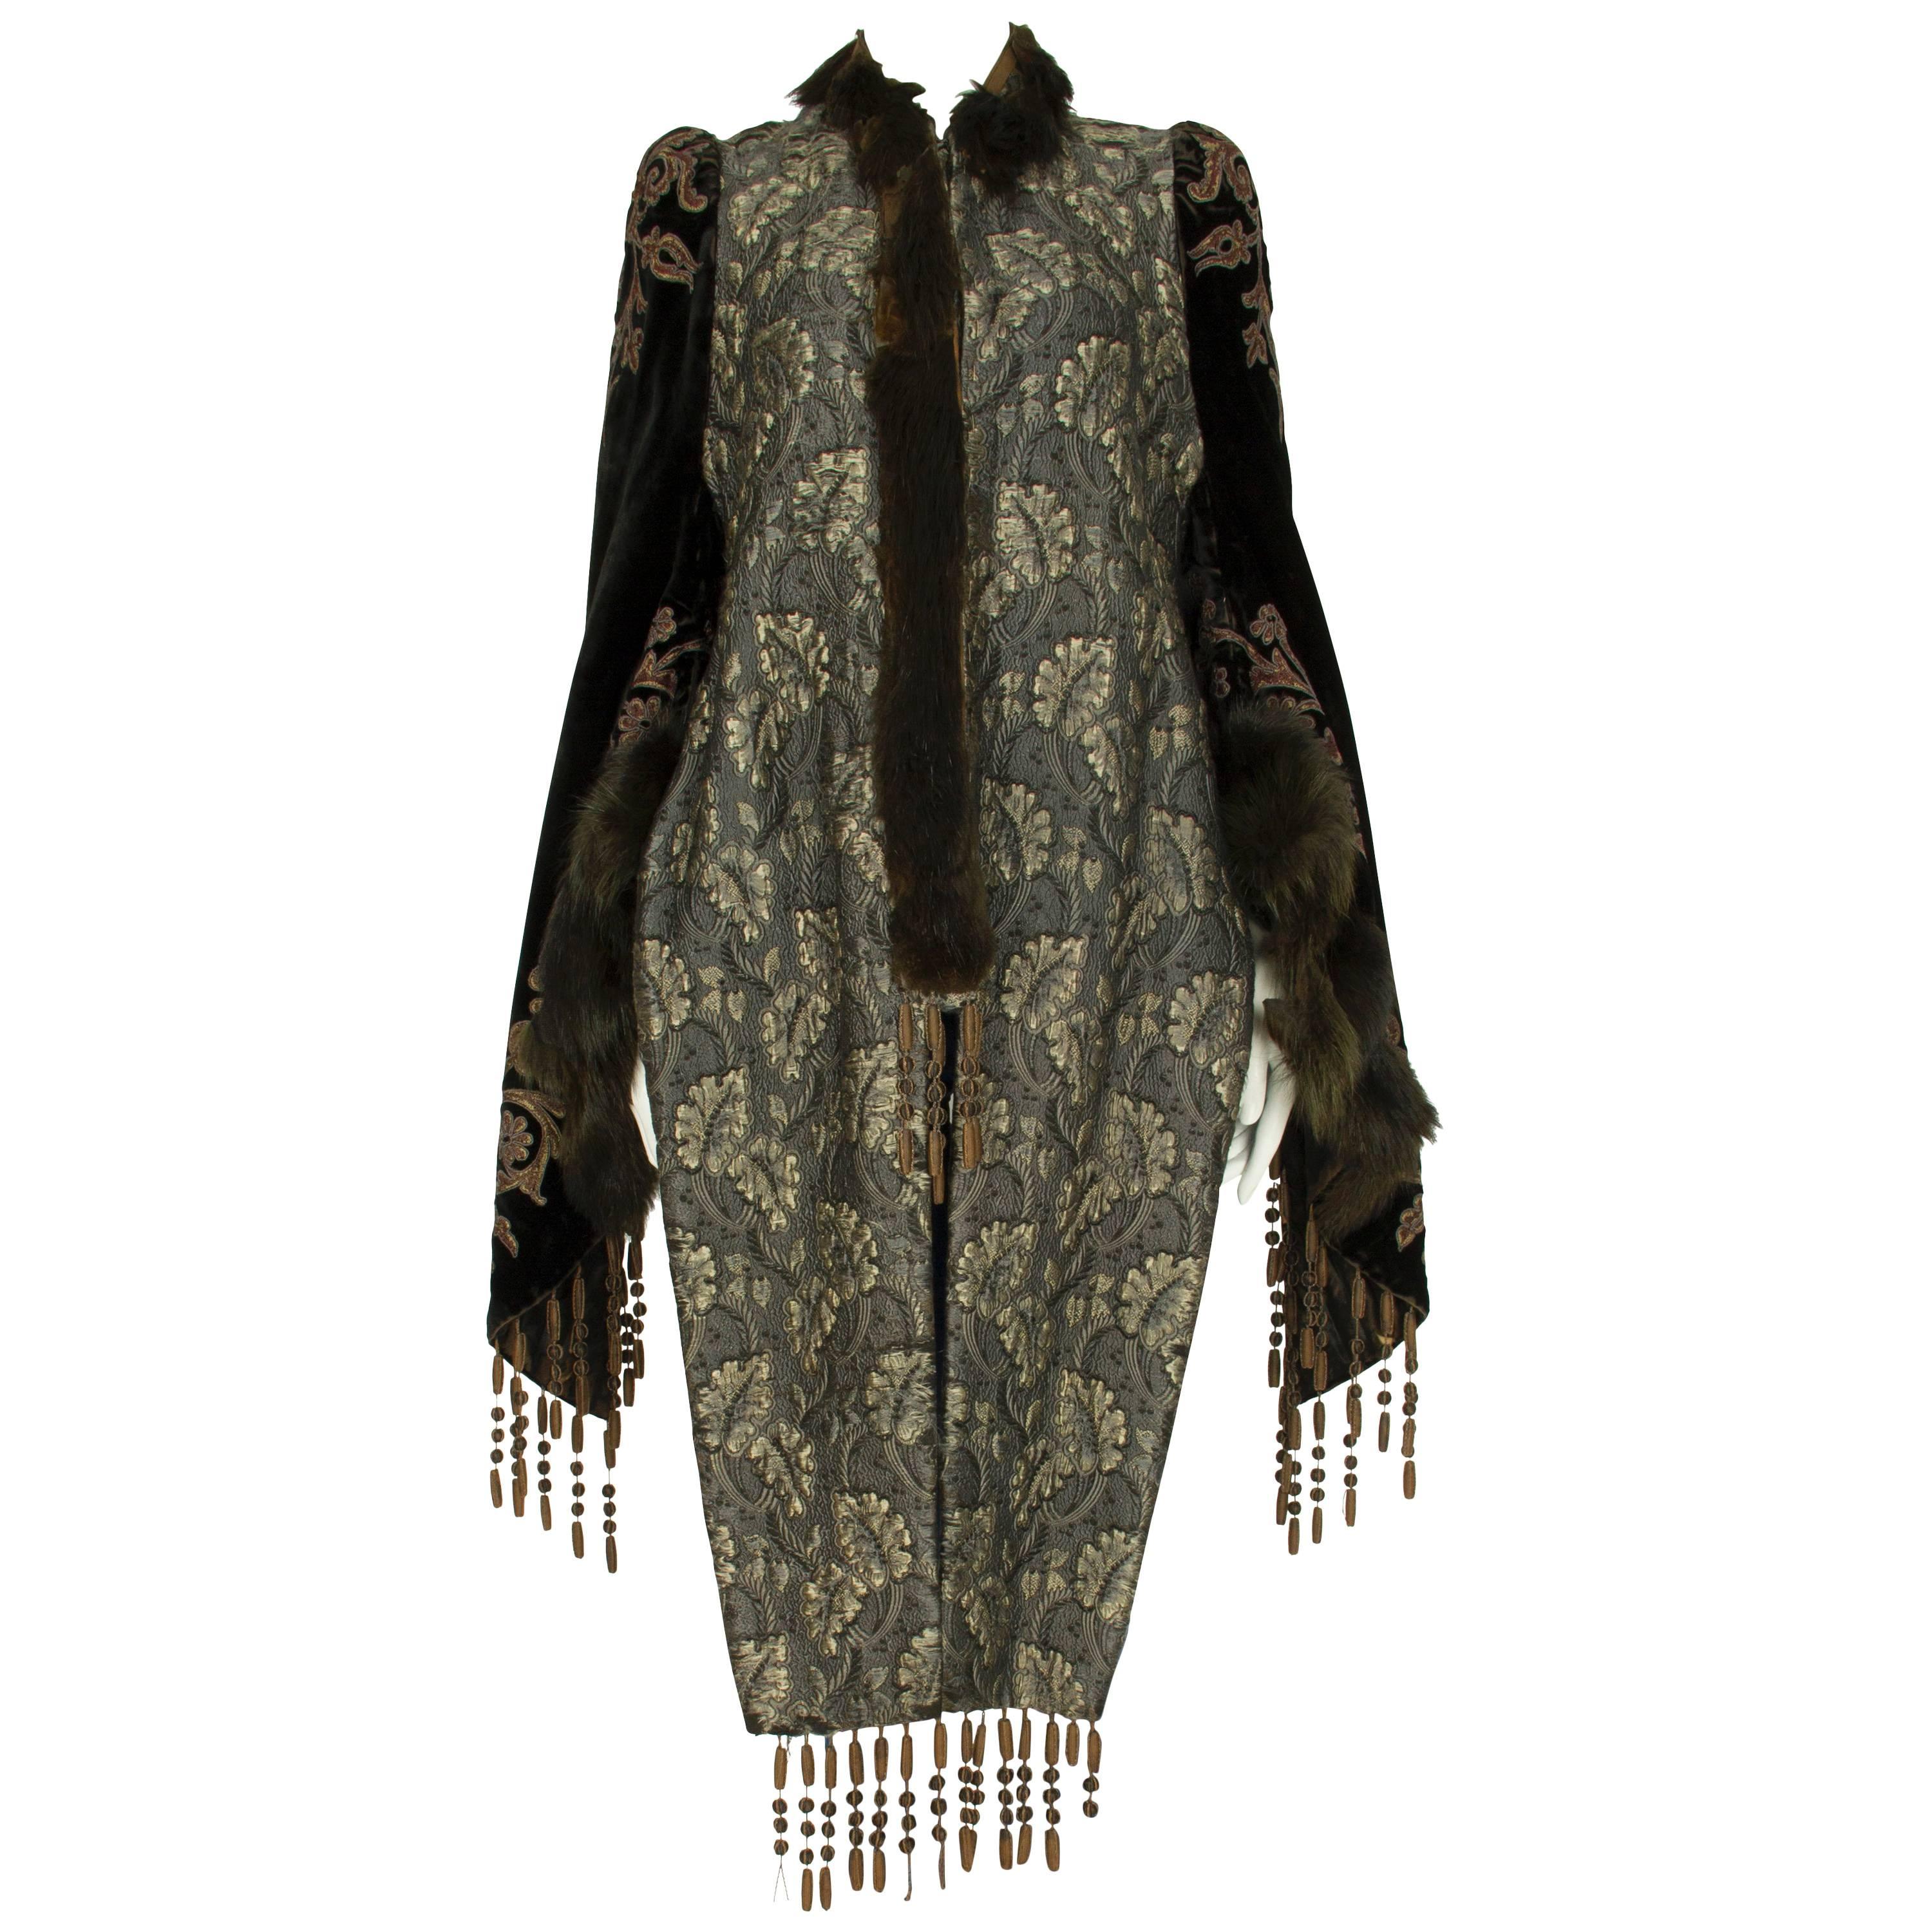 Luxurious 1900's Extravagant Velvet Jacket with Fur Trim For Sale